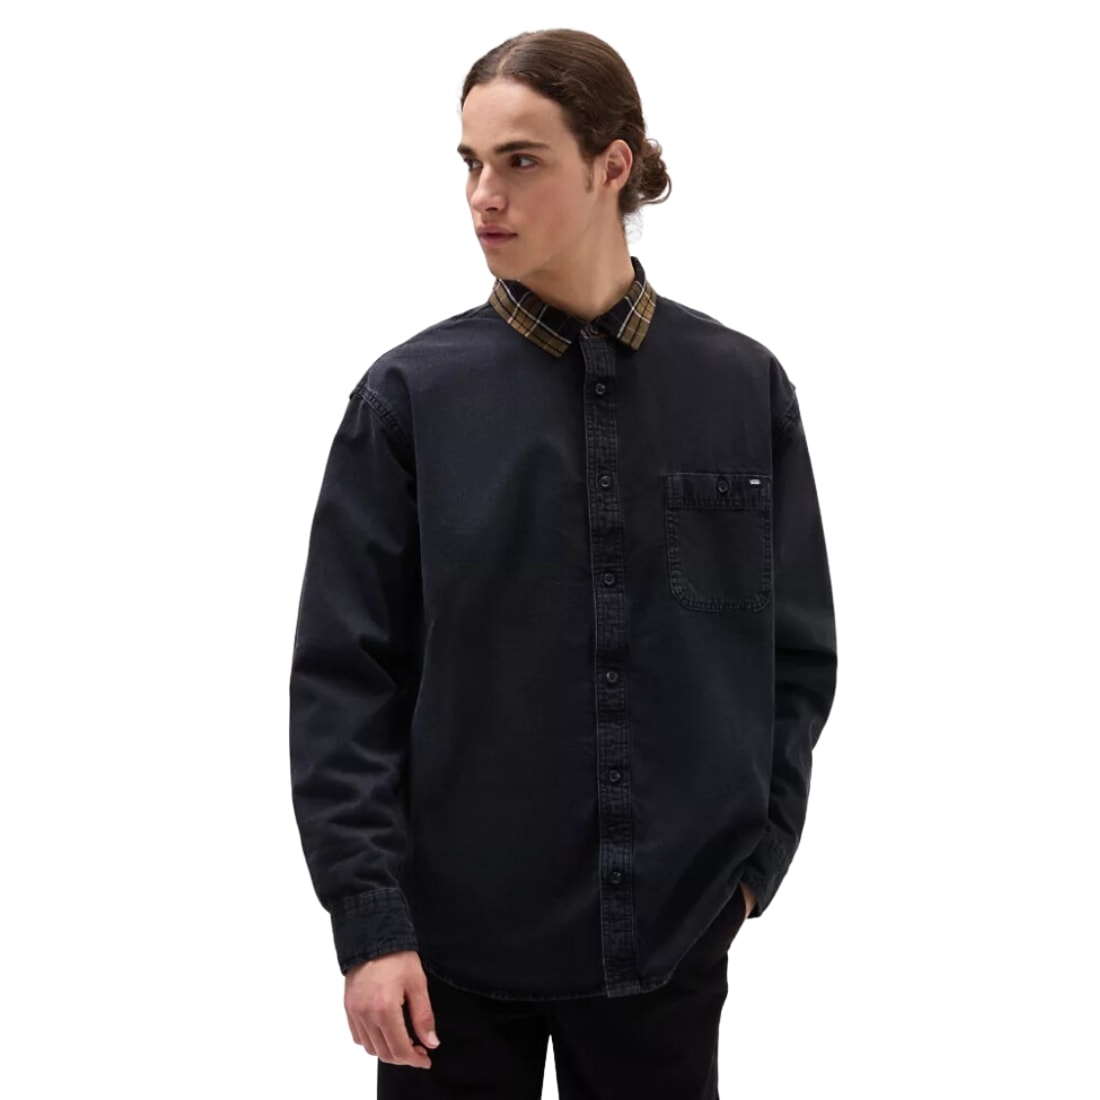 Vans Deerfiel Longsleeve Woven Shirt - Black - Mens Casual Shirt by Vans